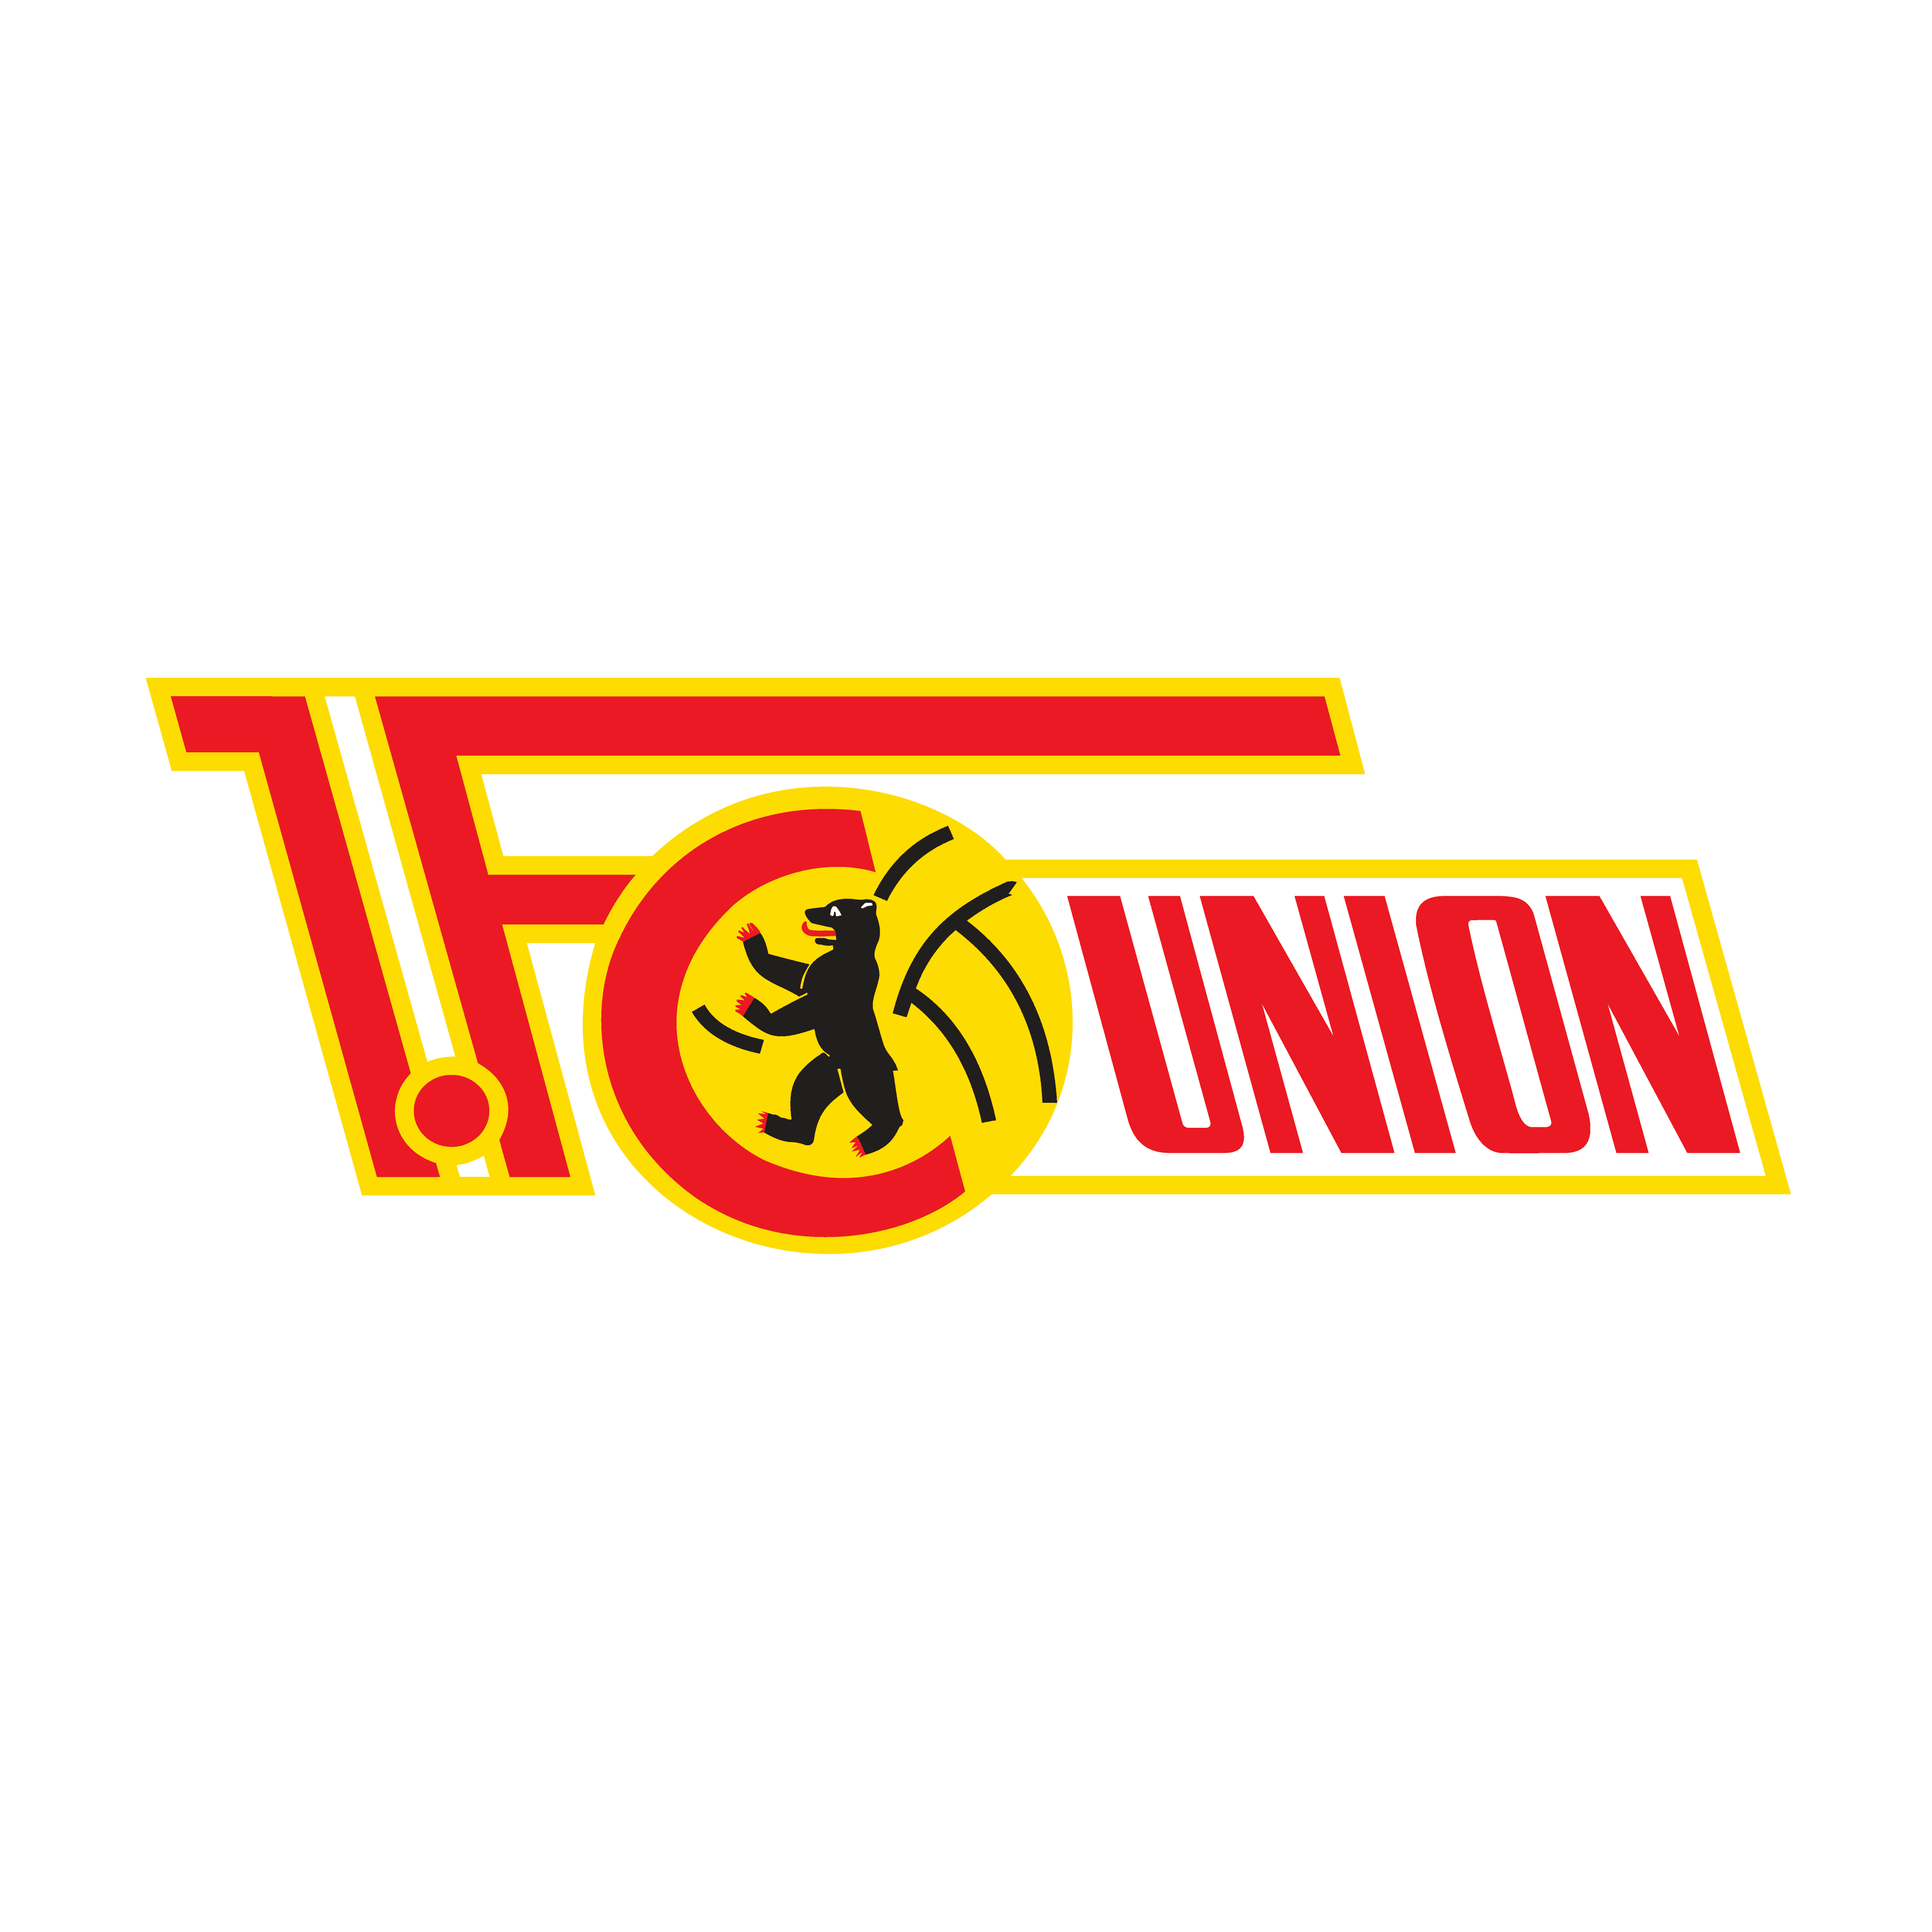 logo fc union berlin